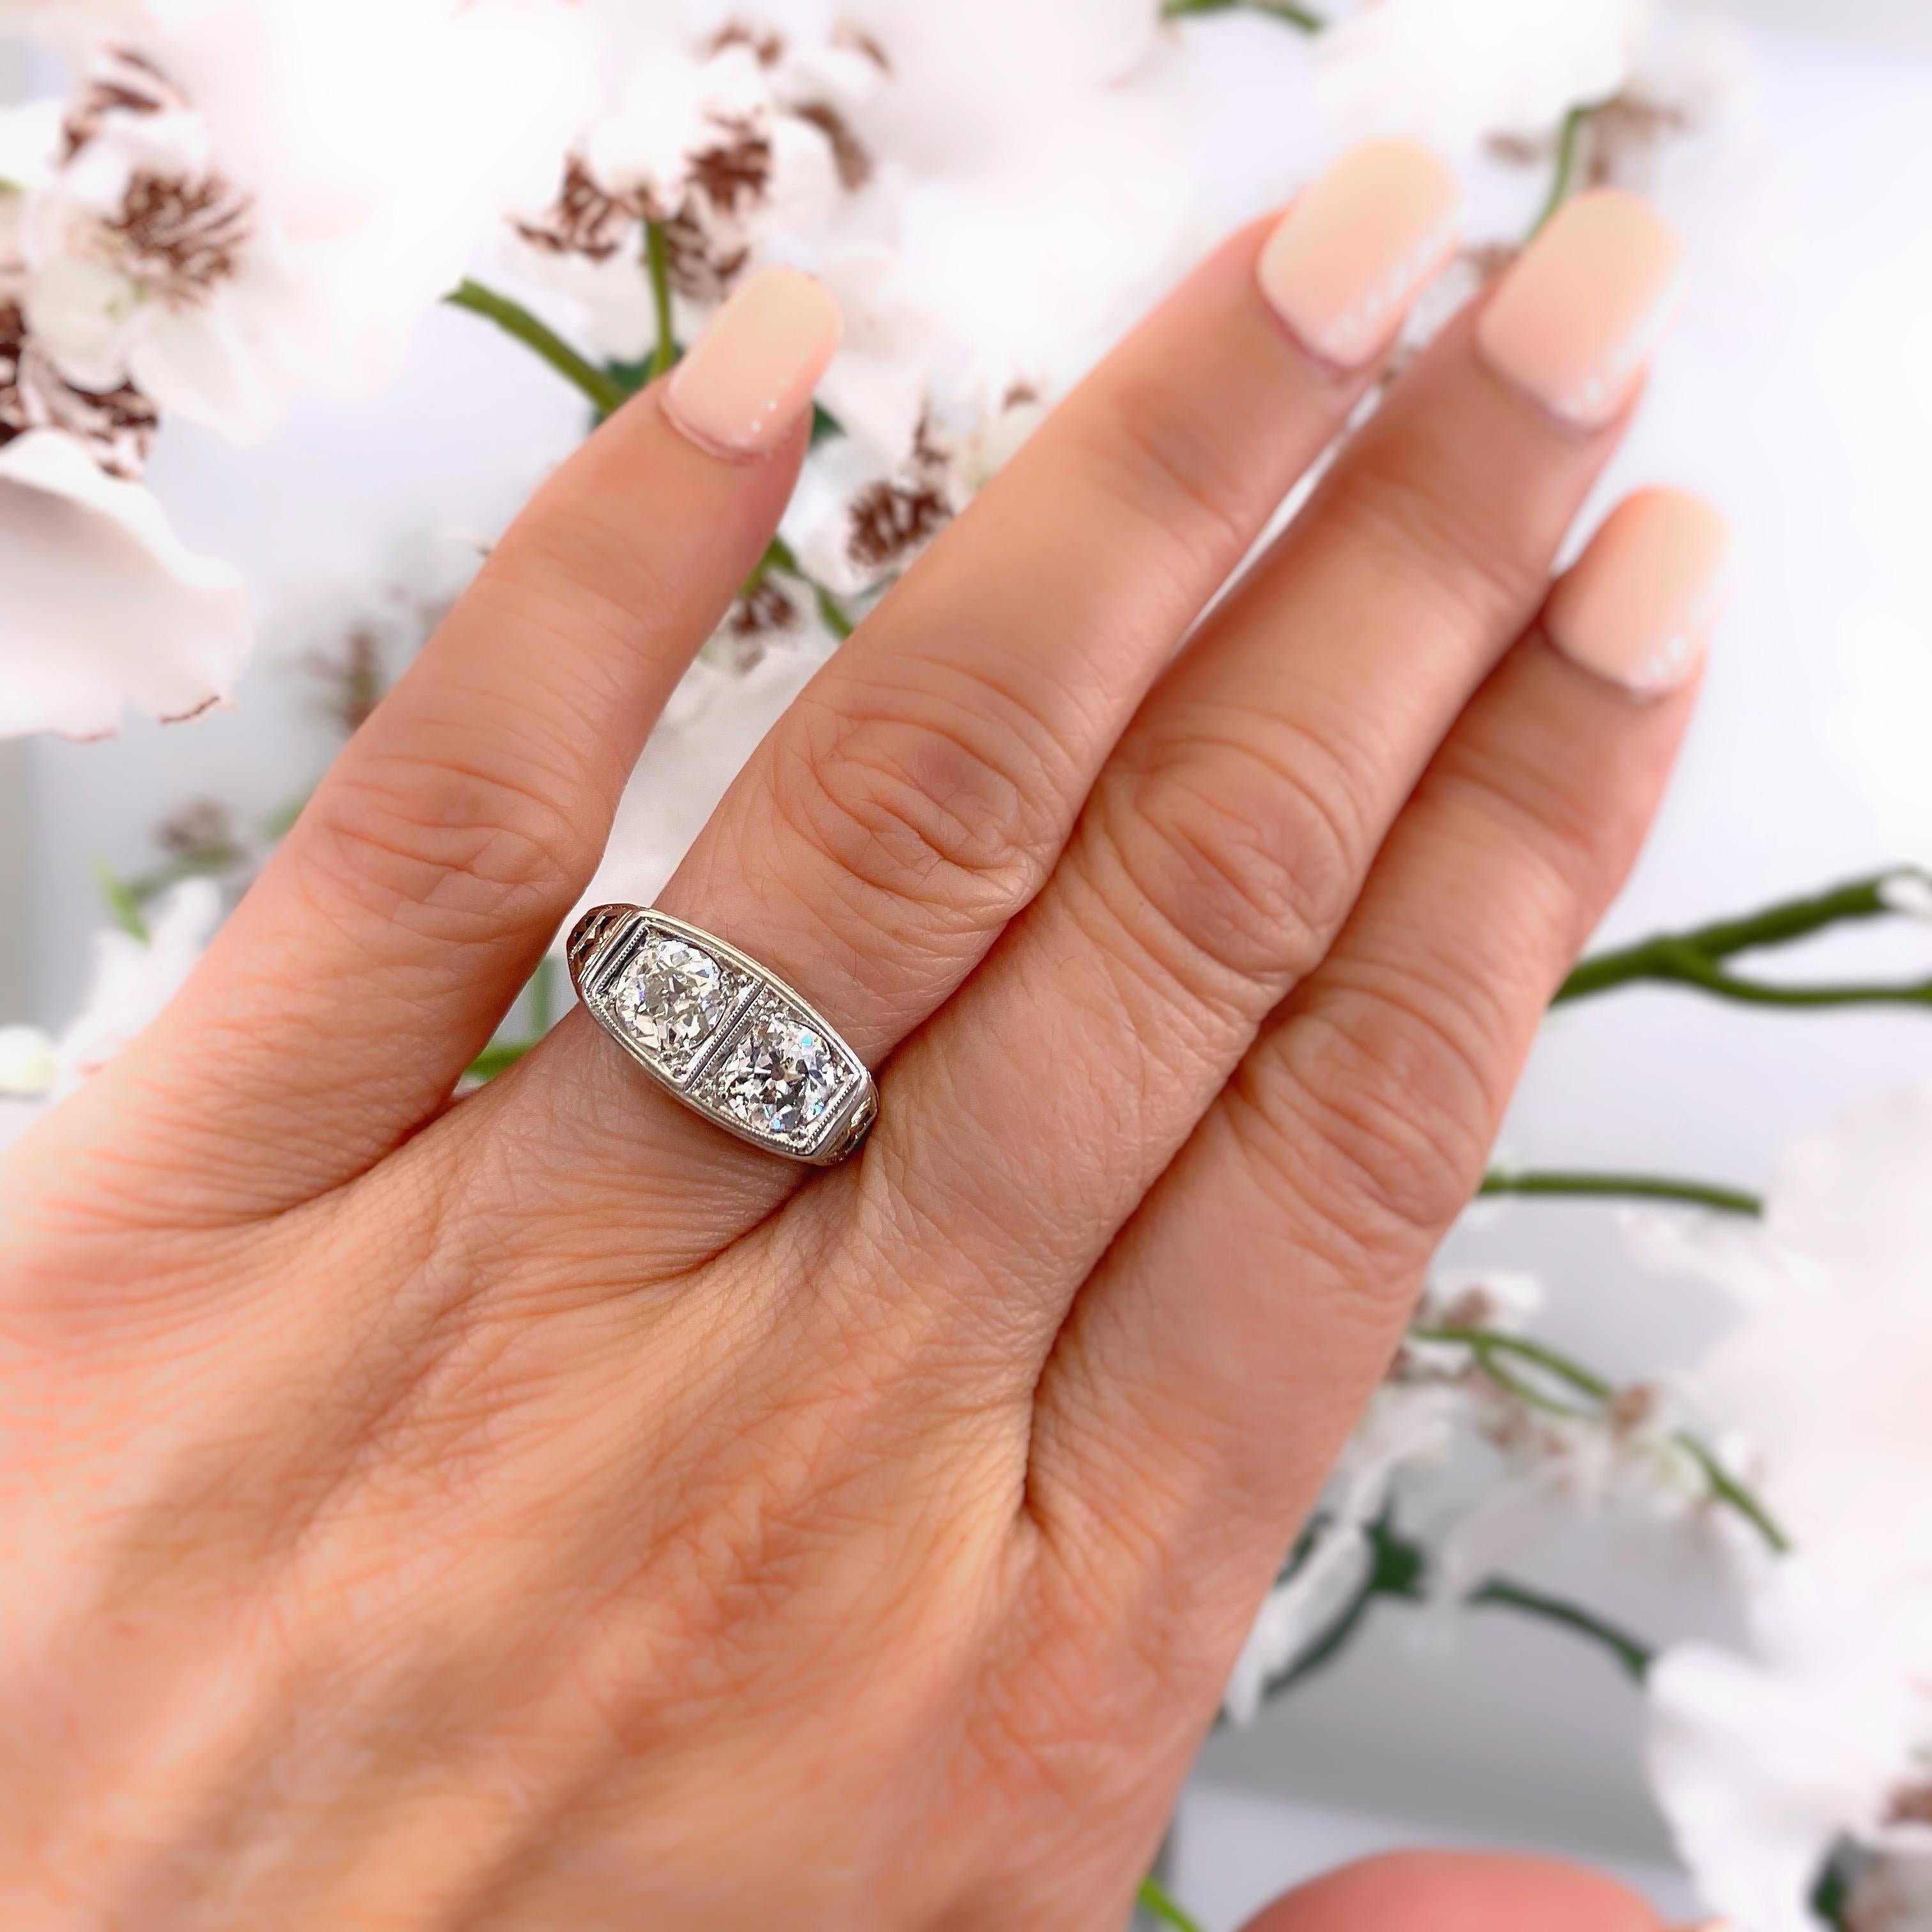 Antique Art Nouveau Diamond Ring
Style:  Two-Stone Filigree Diamond Ring
Metal:  18K White Gold
Size / Measurements:  6.5, sizable
TCW:  1.25 Carats Total
Diamonds:  2 Old Mine Cut Diamonds
Color & Clarity:  I - J Color,  I1 Clarity
Hallmark: 